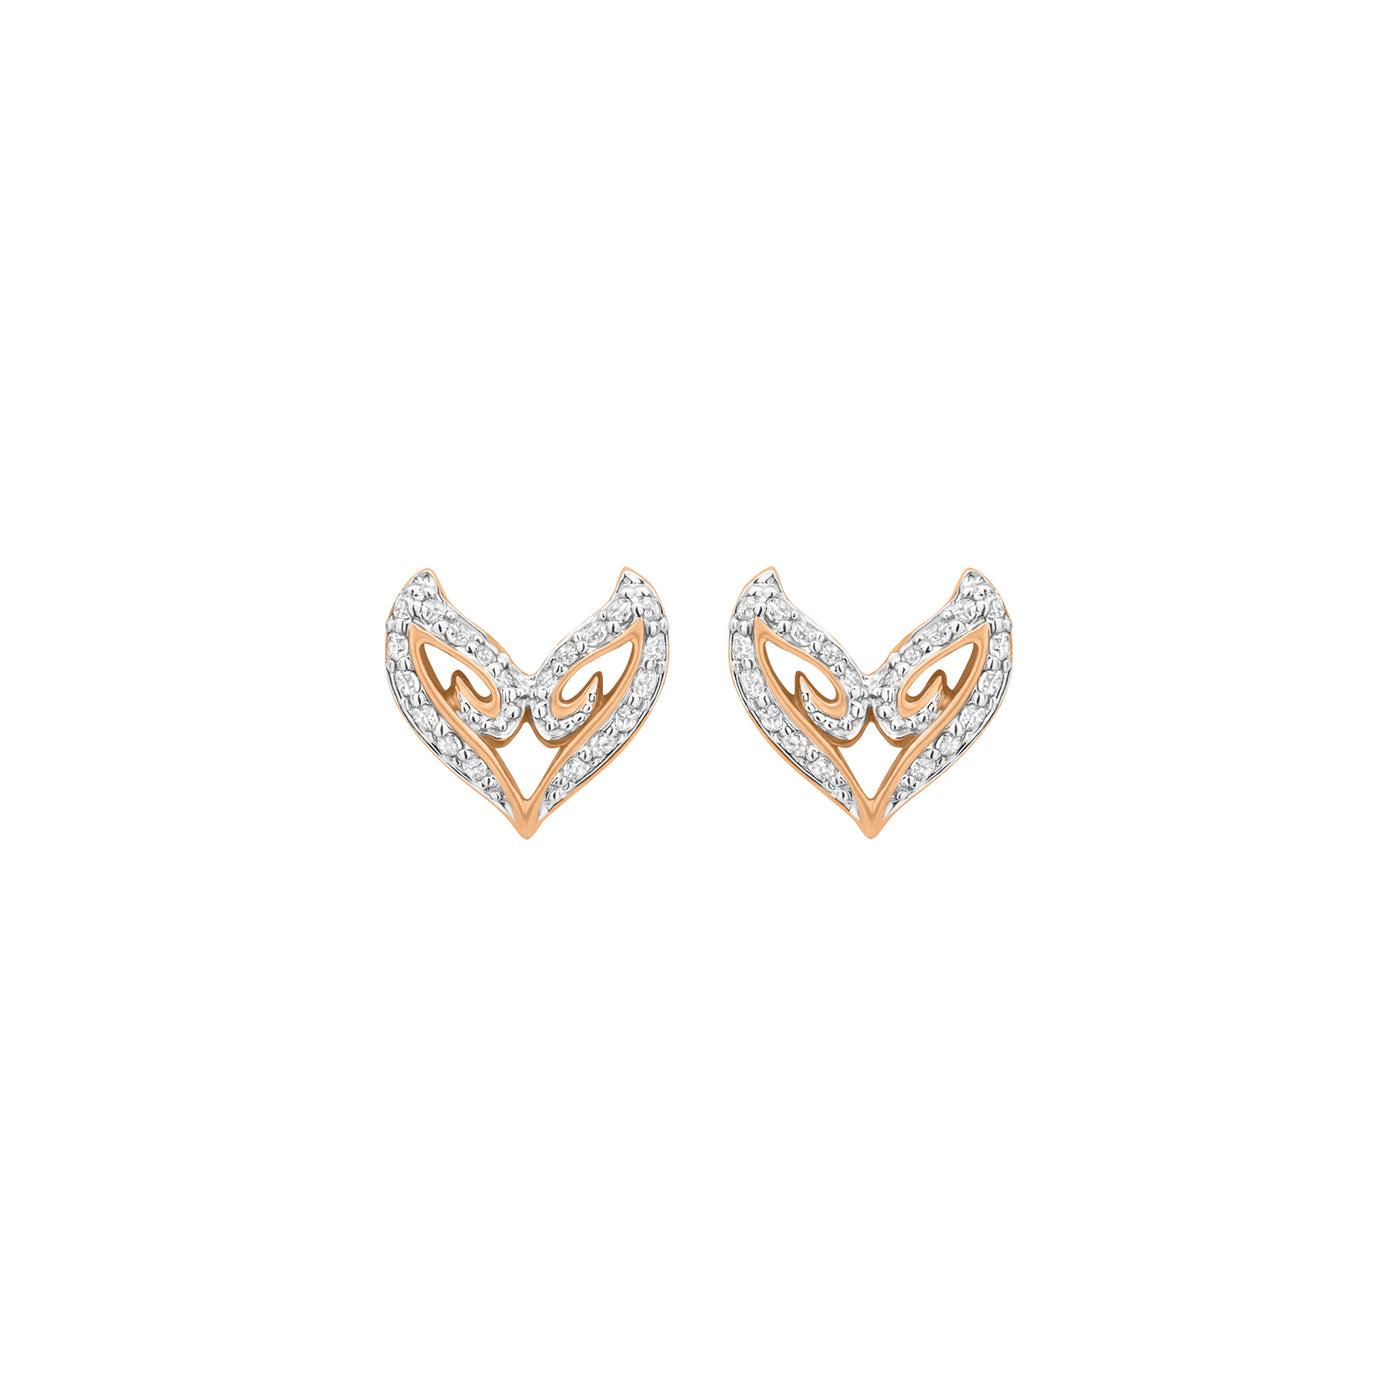 V Pavé Stud Earring - 18K Rose Gold Vermeil + CZ Blanc